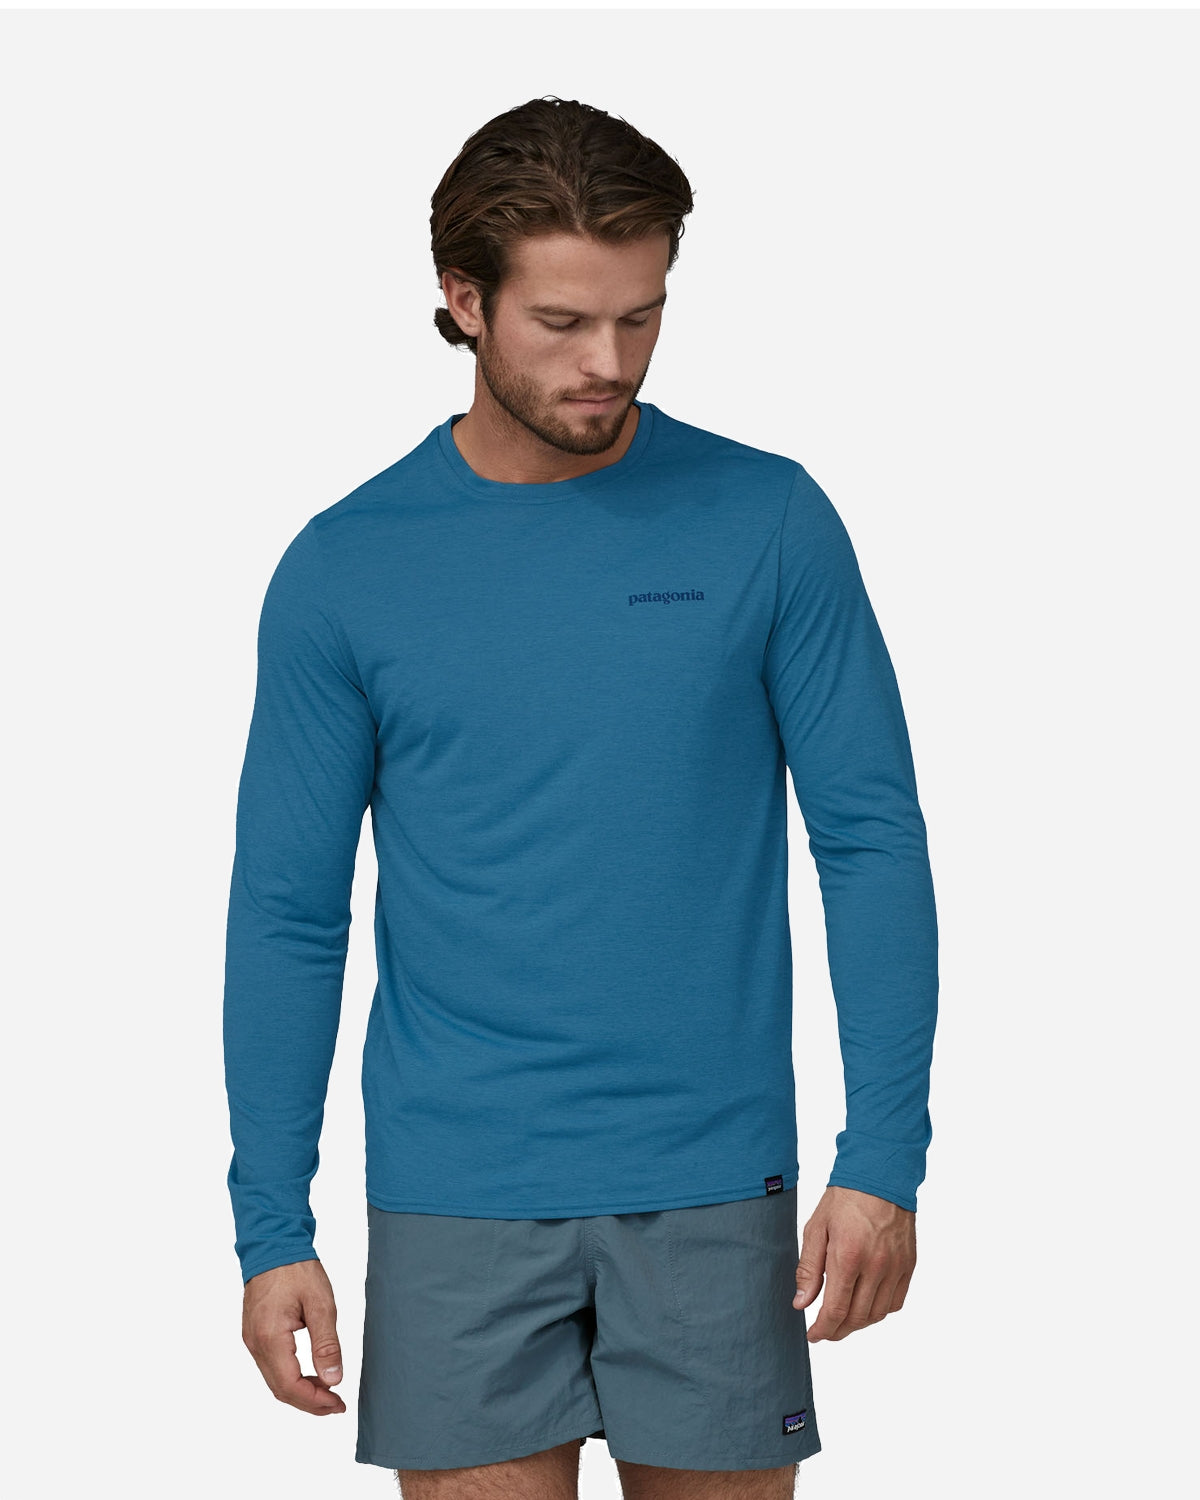 M's L/S Cap Cool Daily Graphic Shirt - Wavy Blue X-Dye - Patagonia - Munkstore.dk